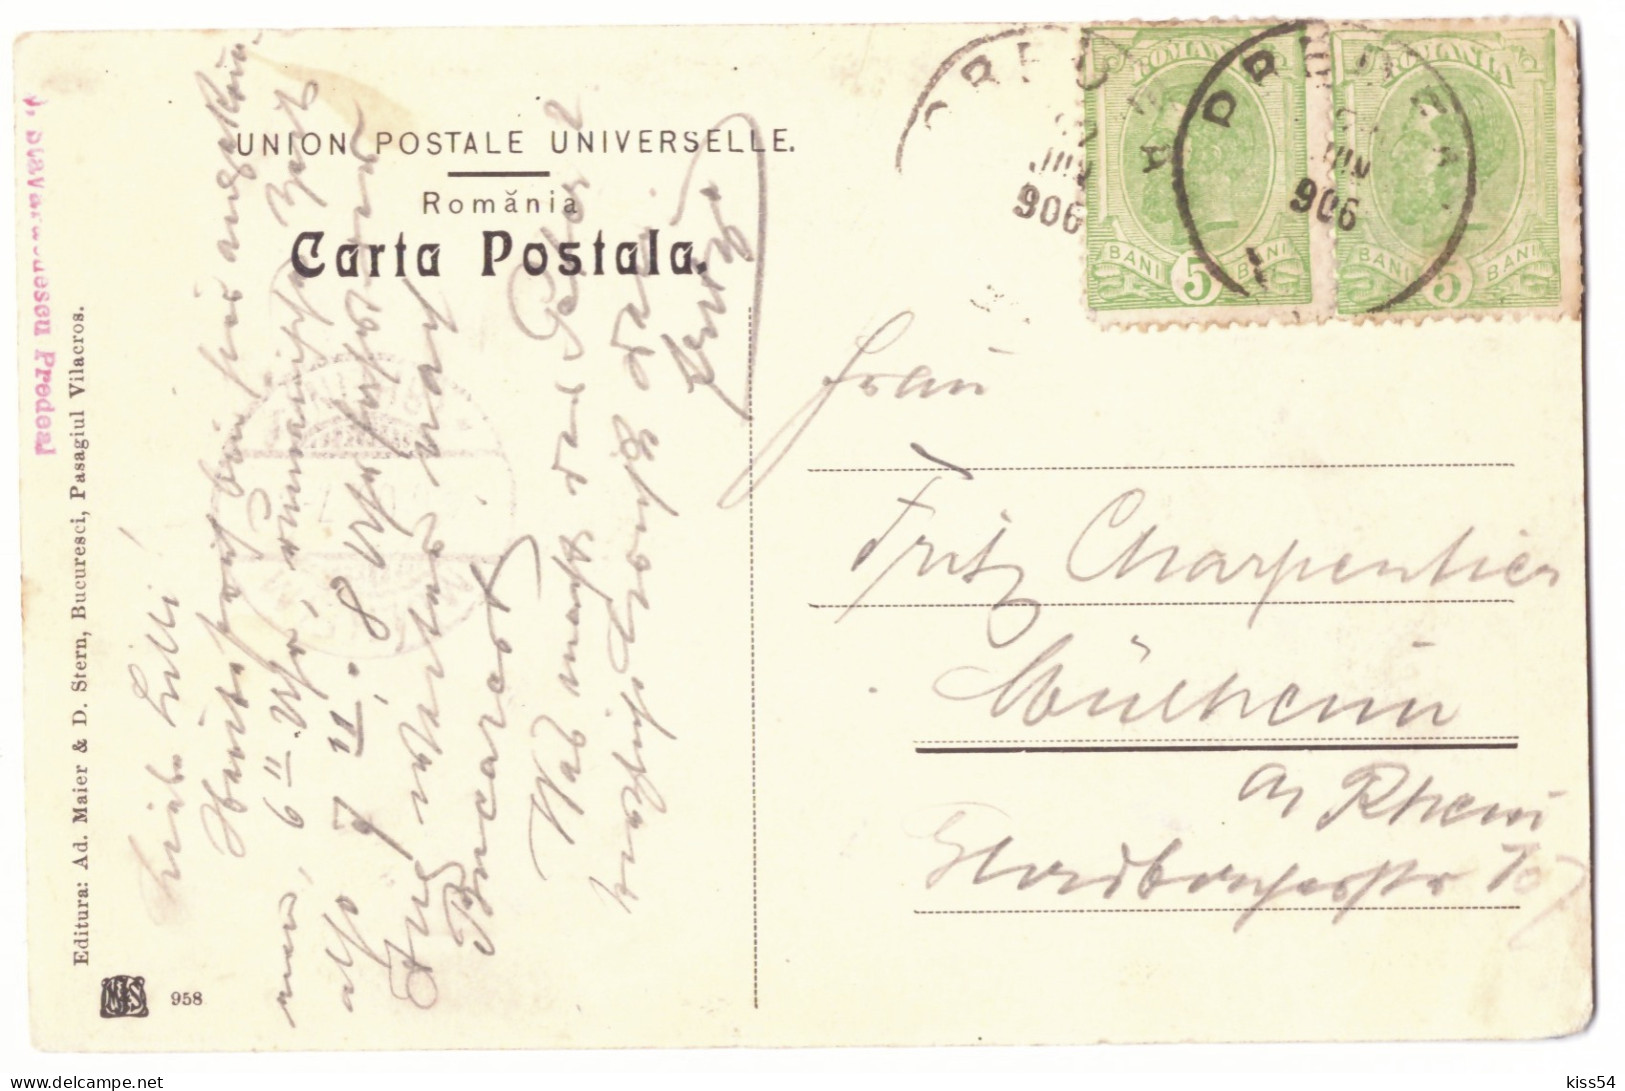 RO 83 - 21110 PREDEAL, Brasov, Romania - Old Postcard - Used - 1906 - Roemenië